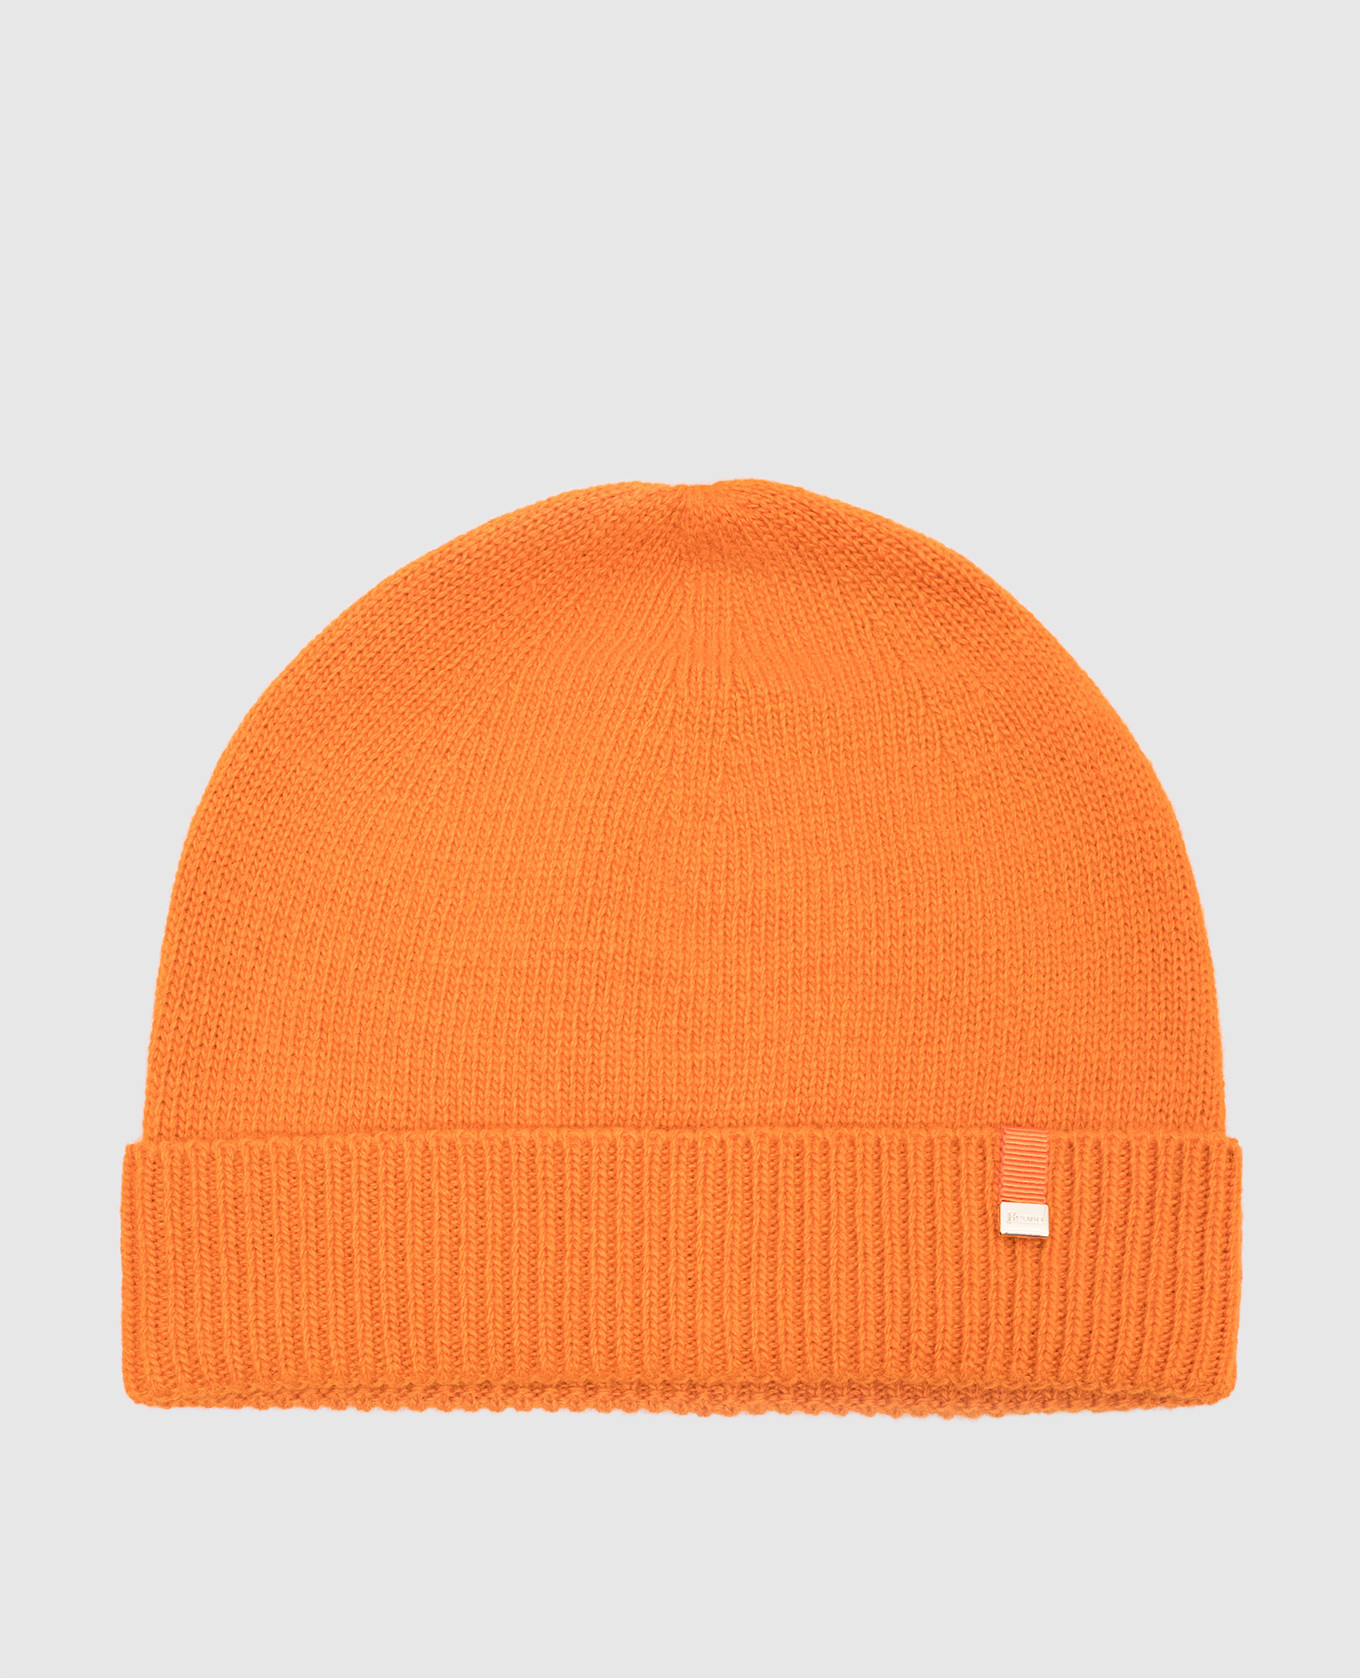 Orange wool hat with logo